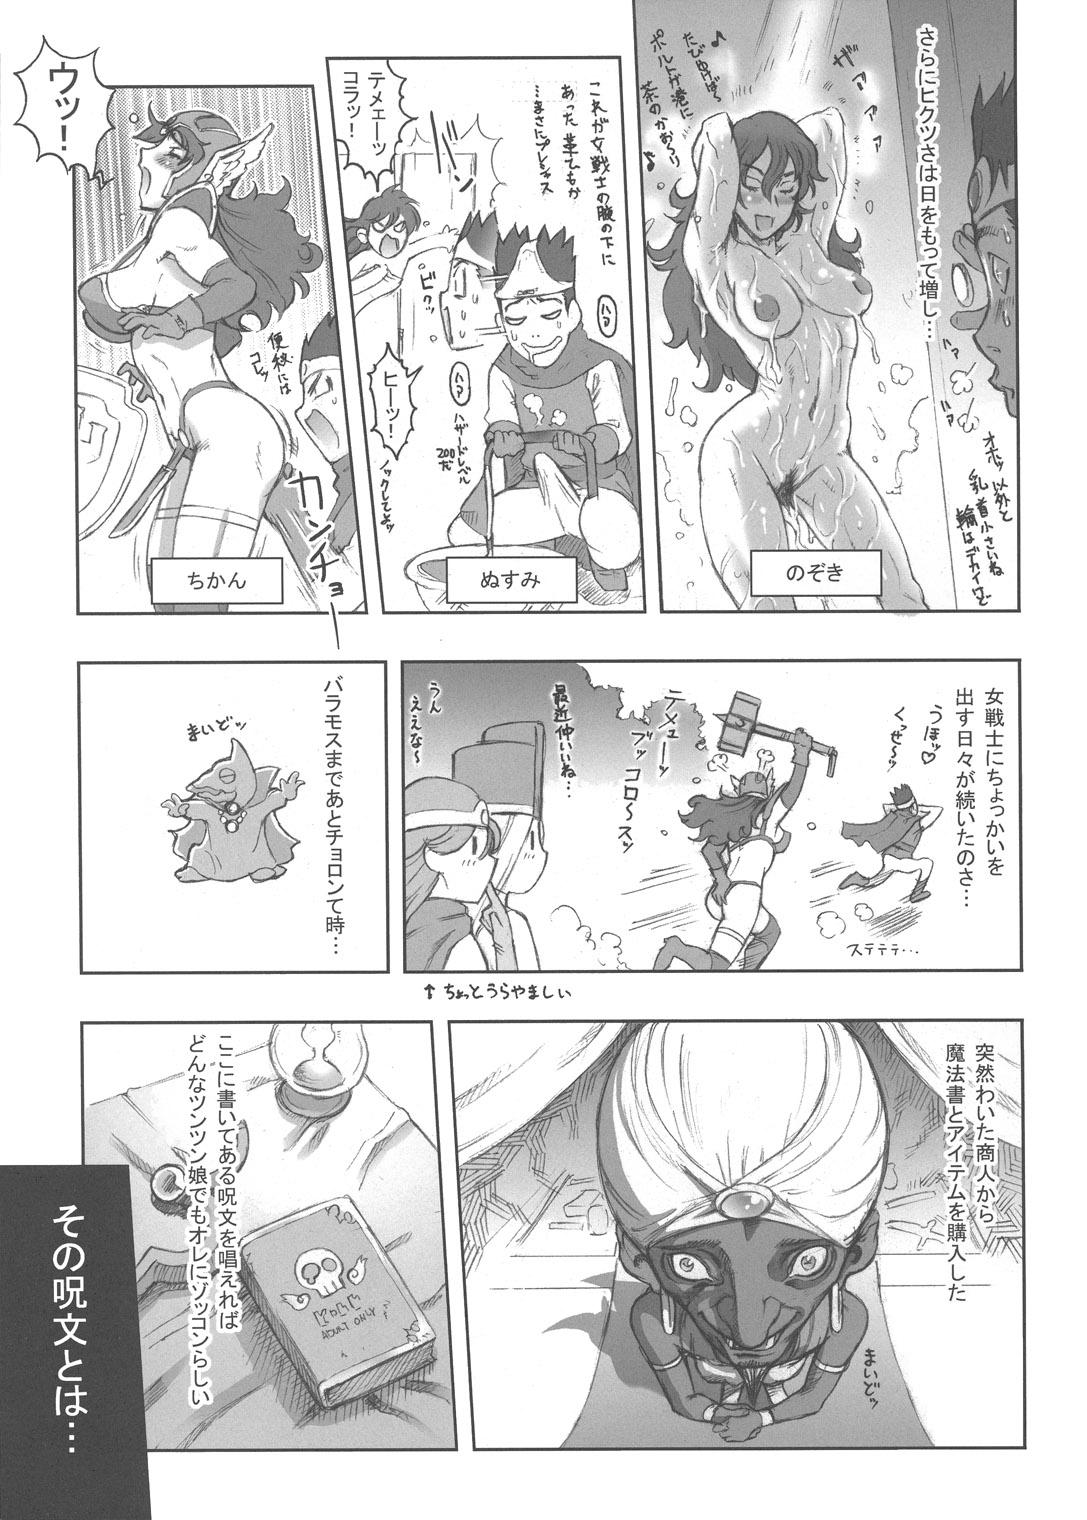 Vaginal Nippon Onna Heroine 3 - Sailor moon Dragon quest iii Boy Girl - Page 6